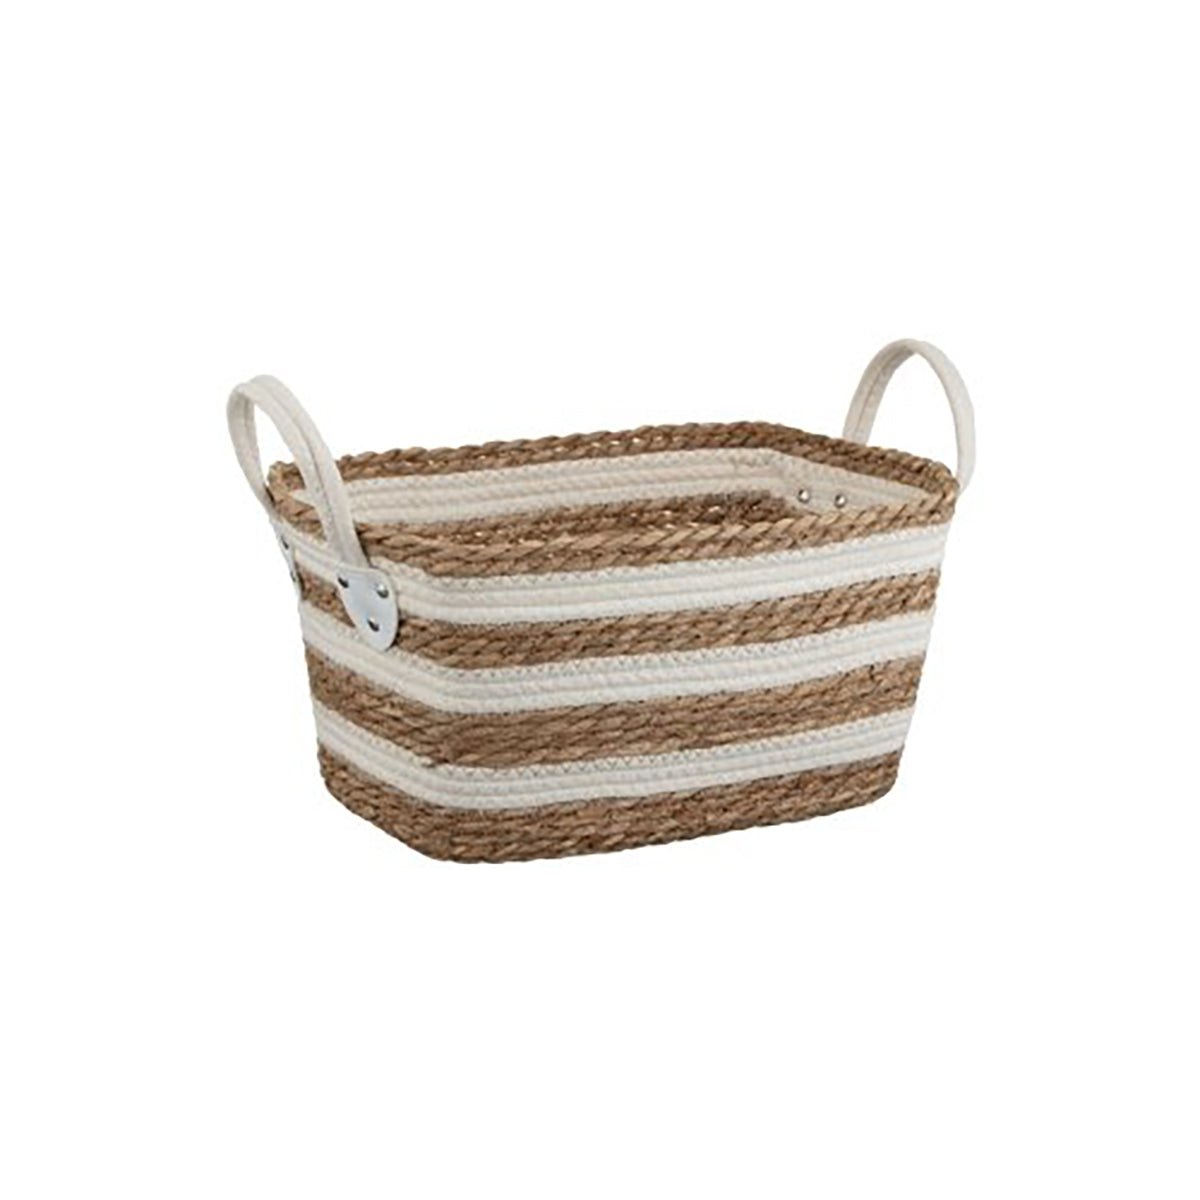 Cream and wicker stripe basket